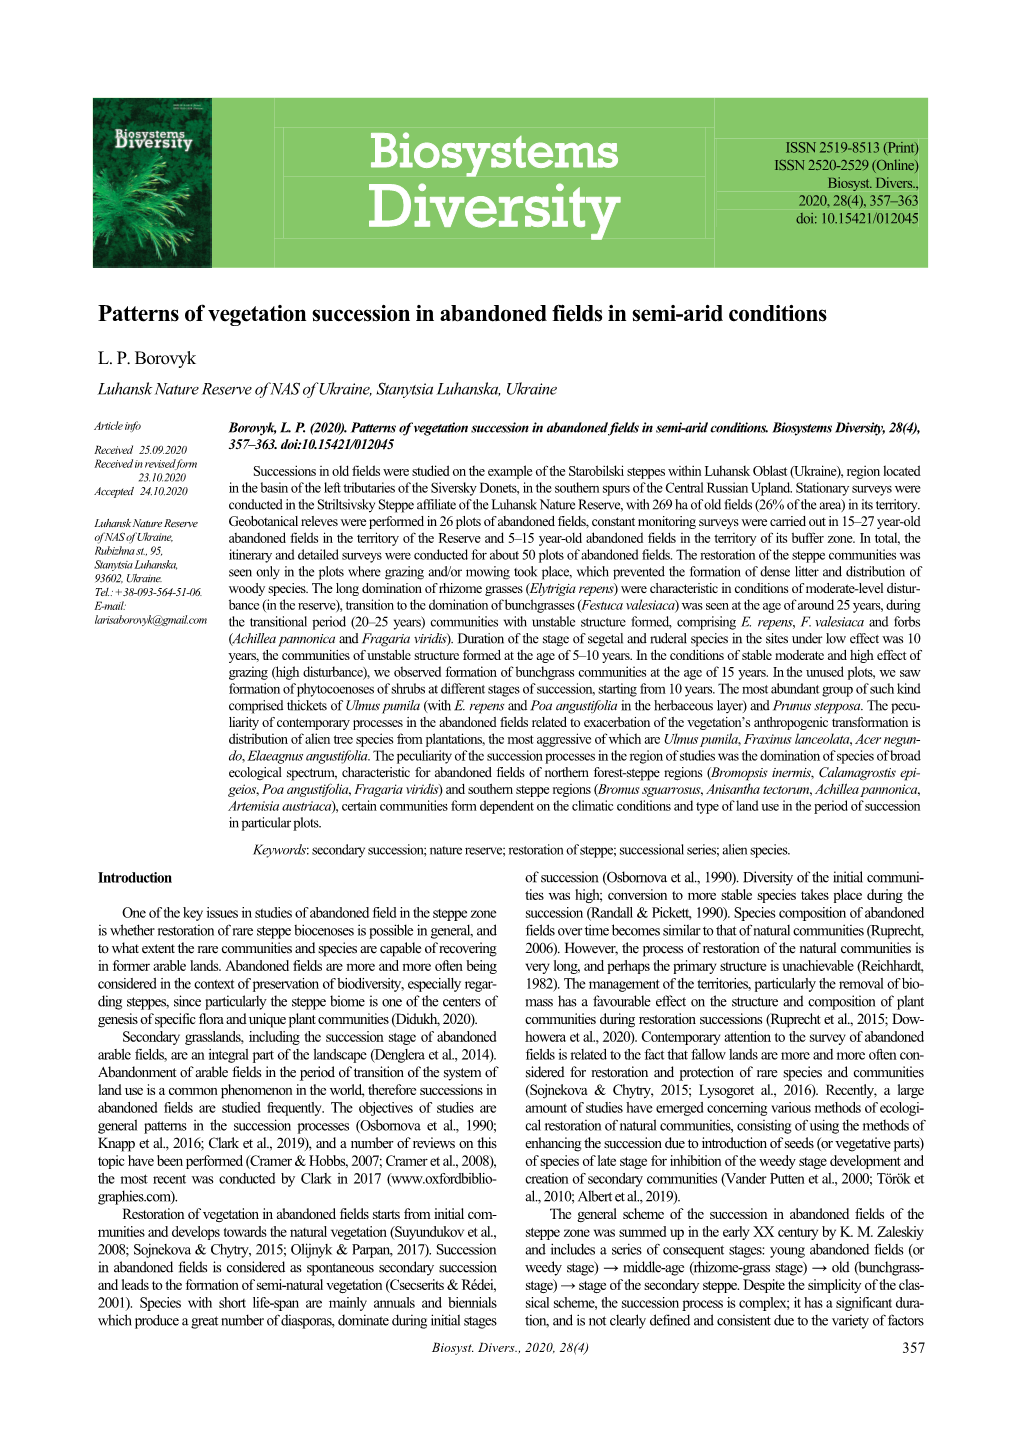 Biosystems Diversity, 28(4), Received 25.09.2020 357–363